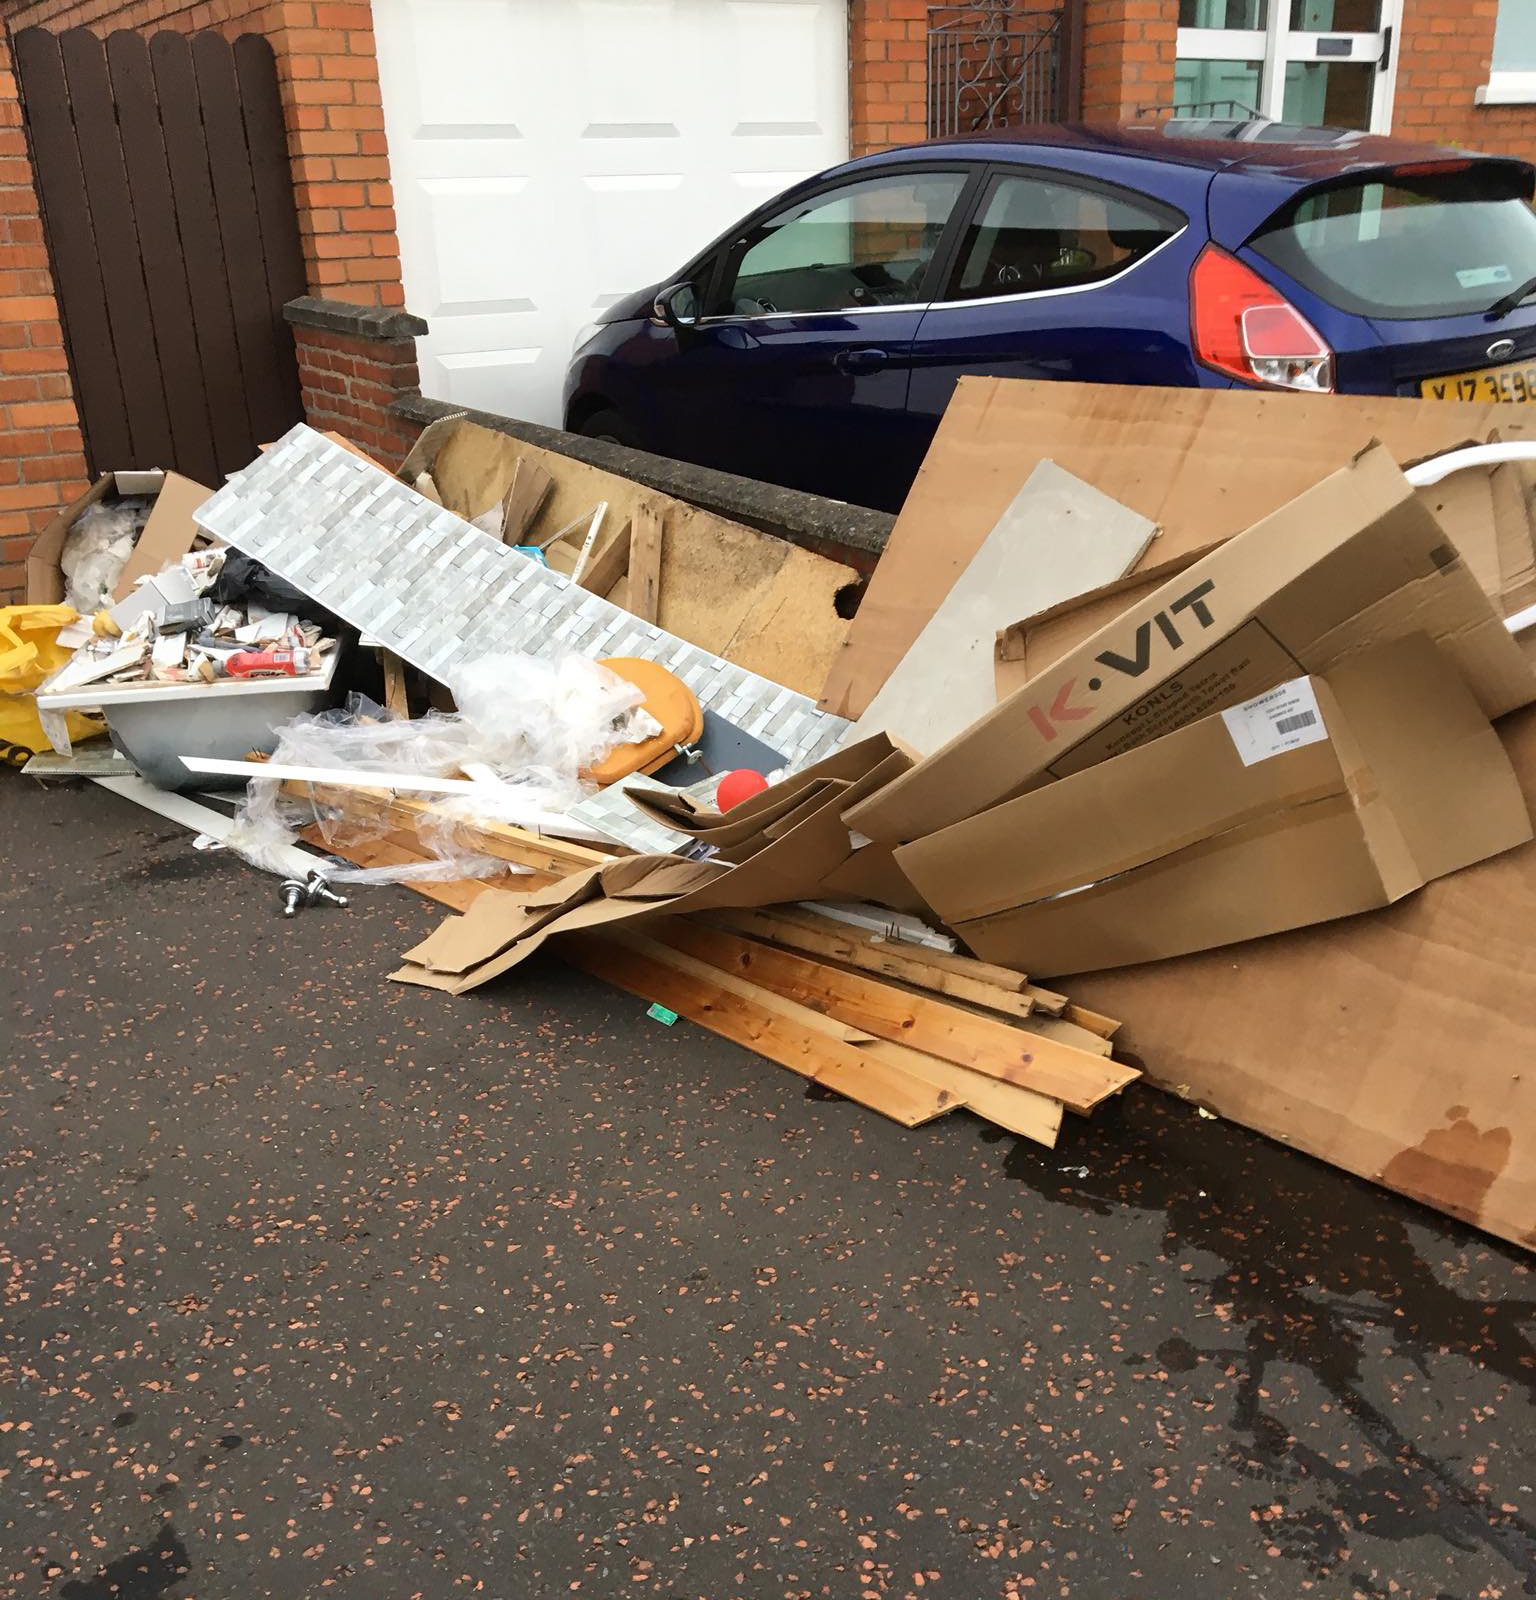 Tarmac driveway blocked by scrap wood and rubbish